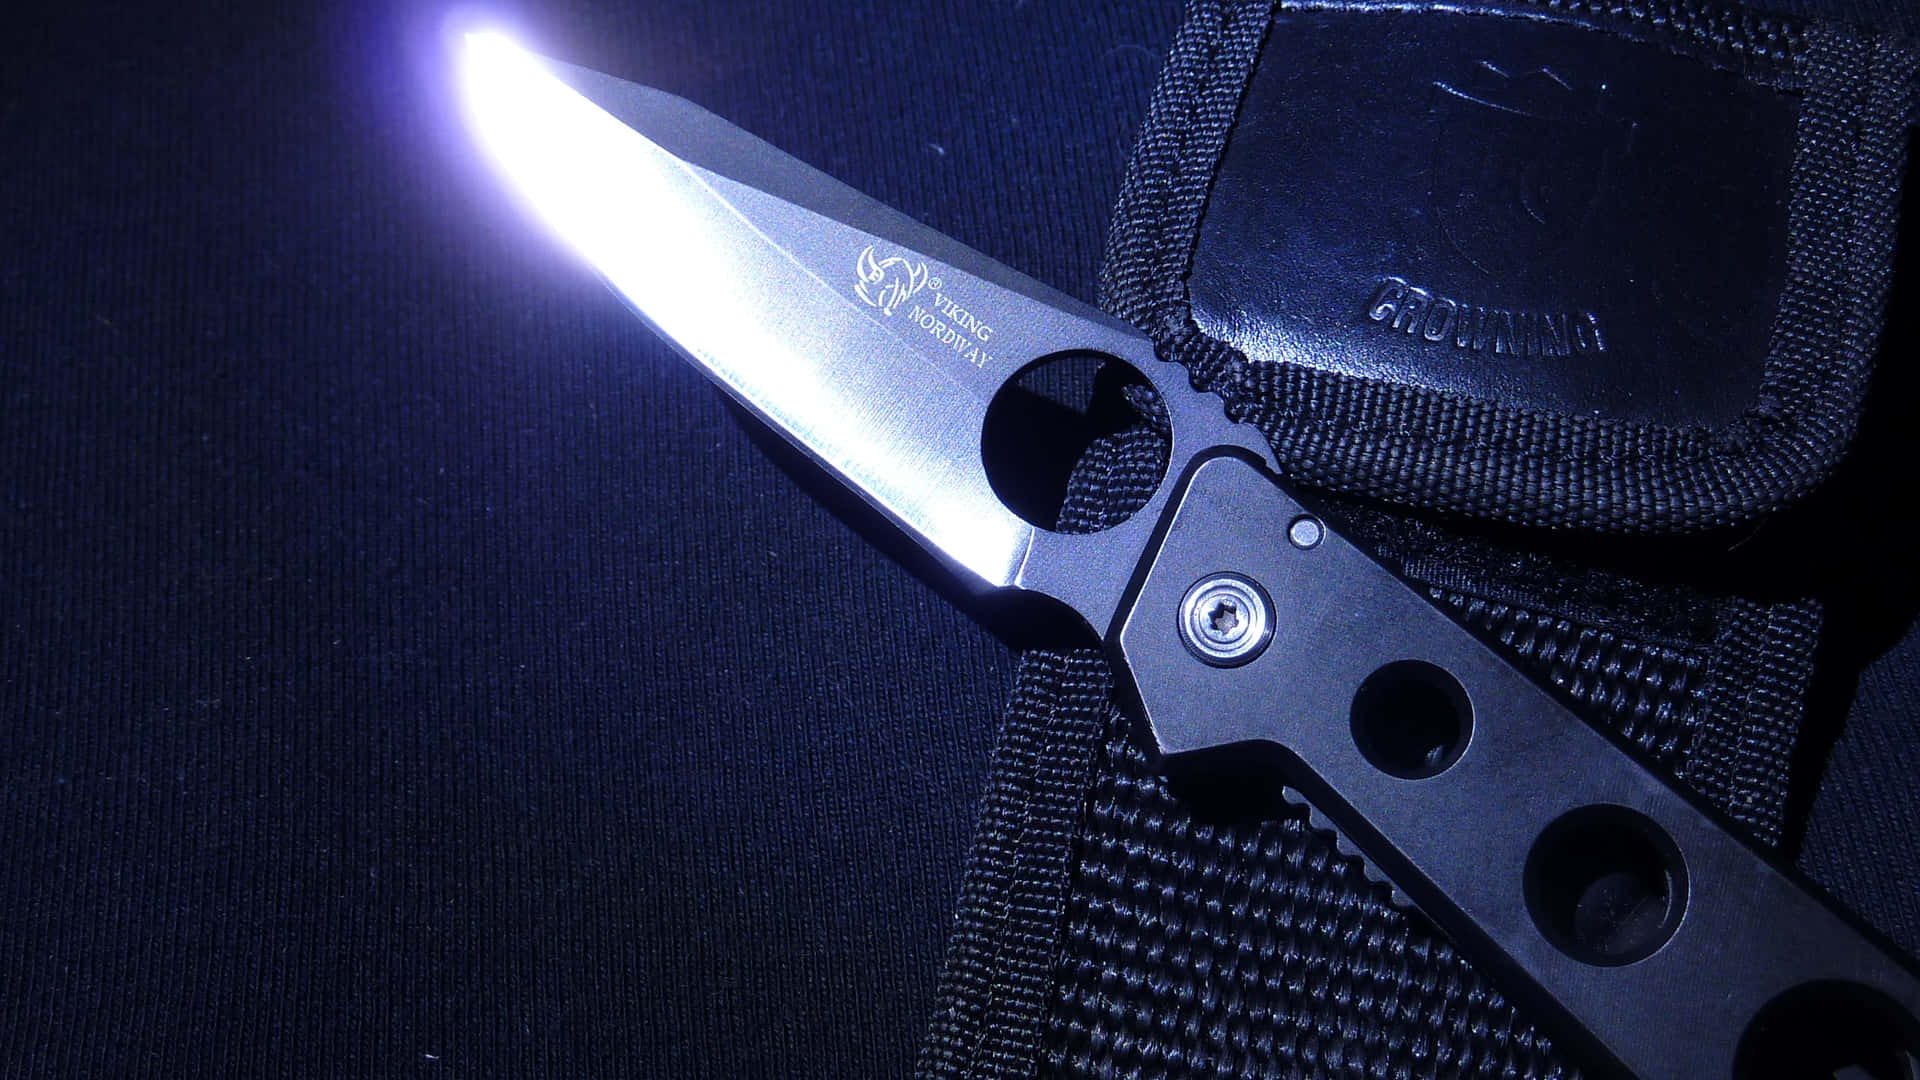 A close up of a sharp kitchen knife